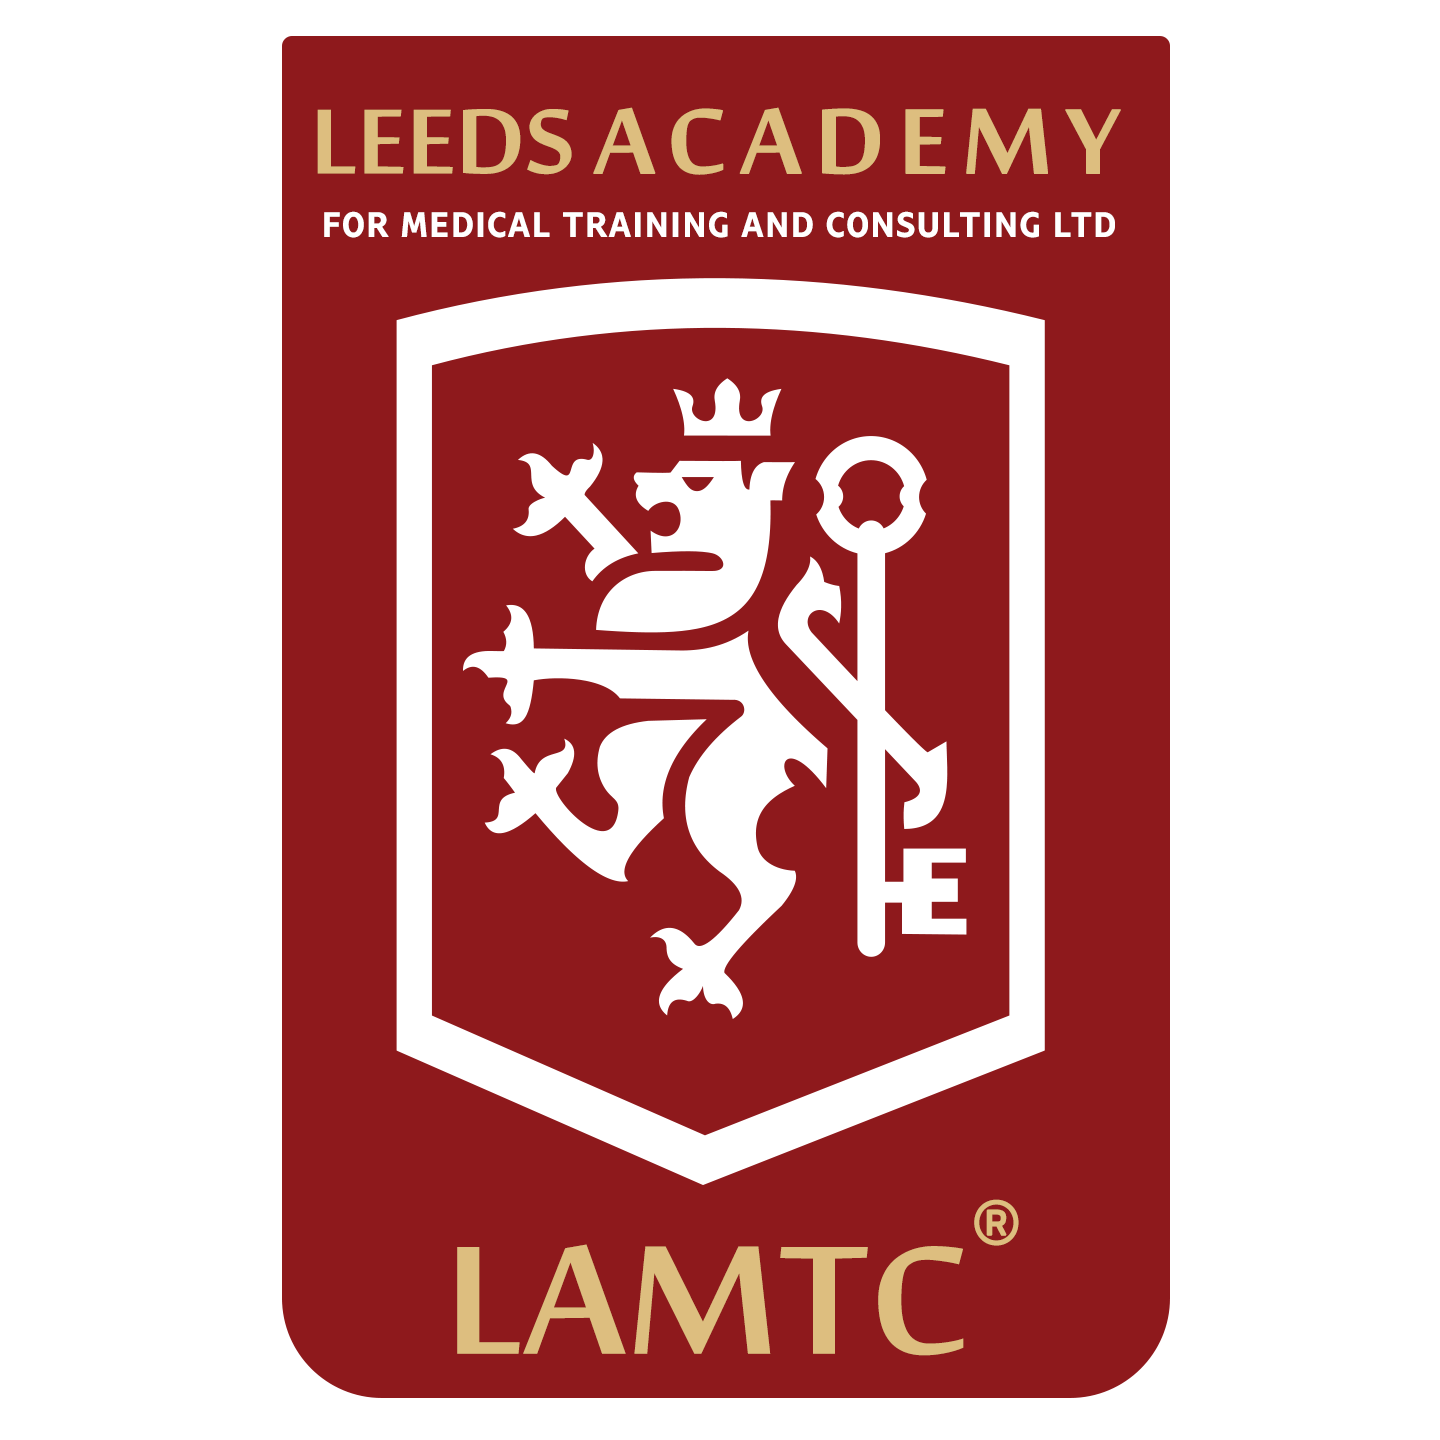 Leeds Academy For Training, Consulting And Alternative Medicine logo